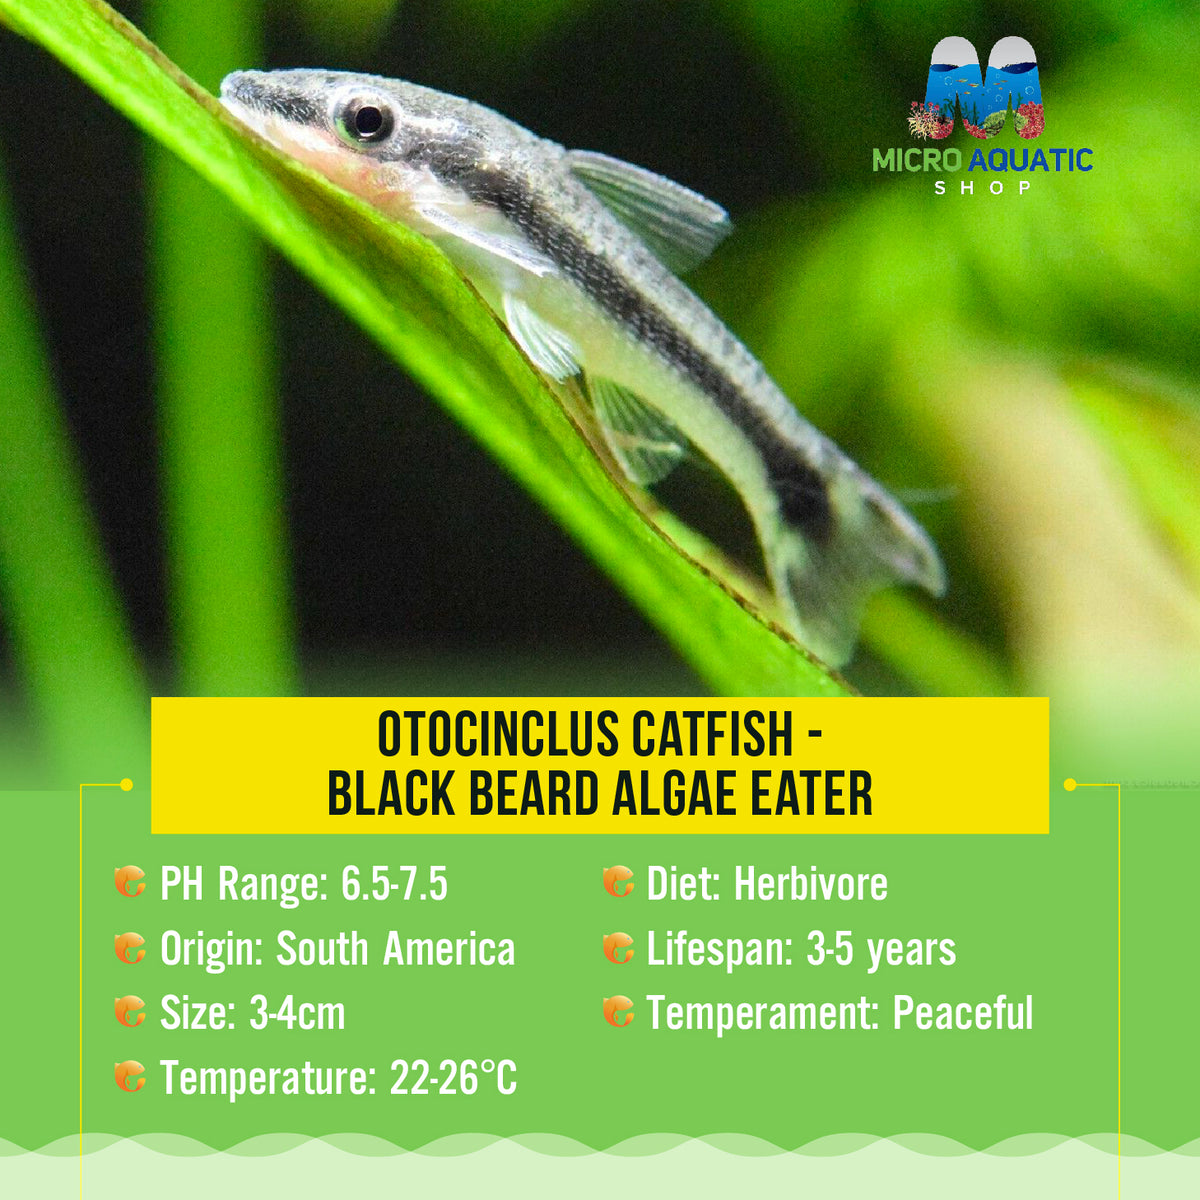 Otocinclus Catfish -Black beard algae eater